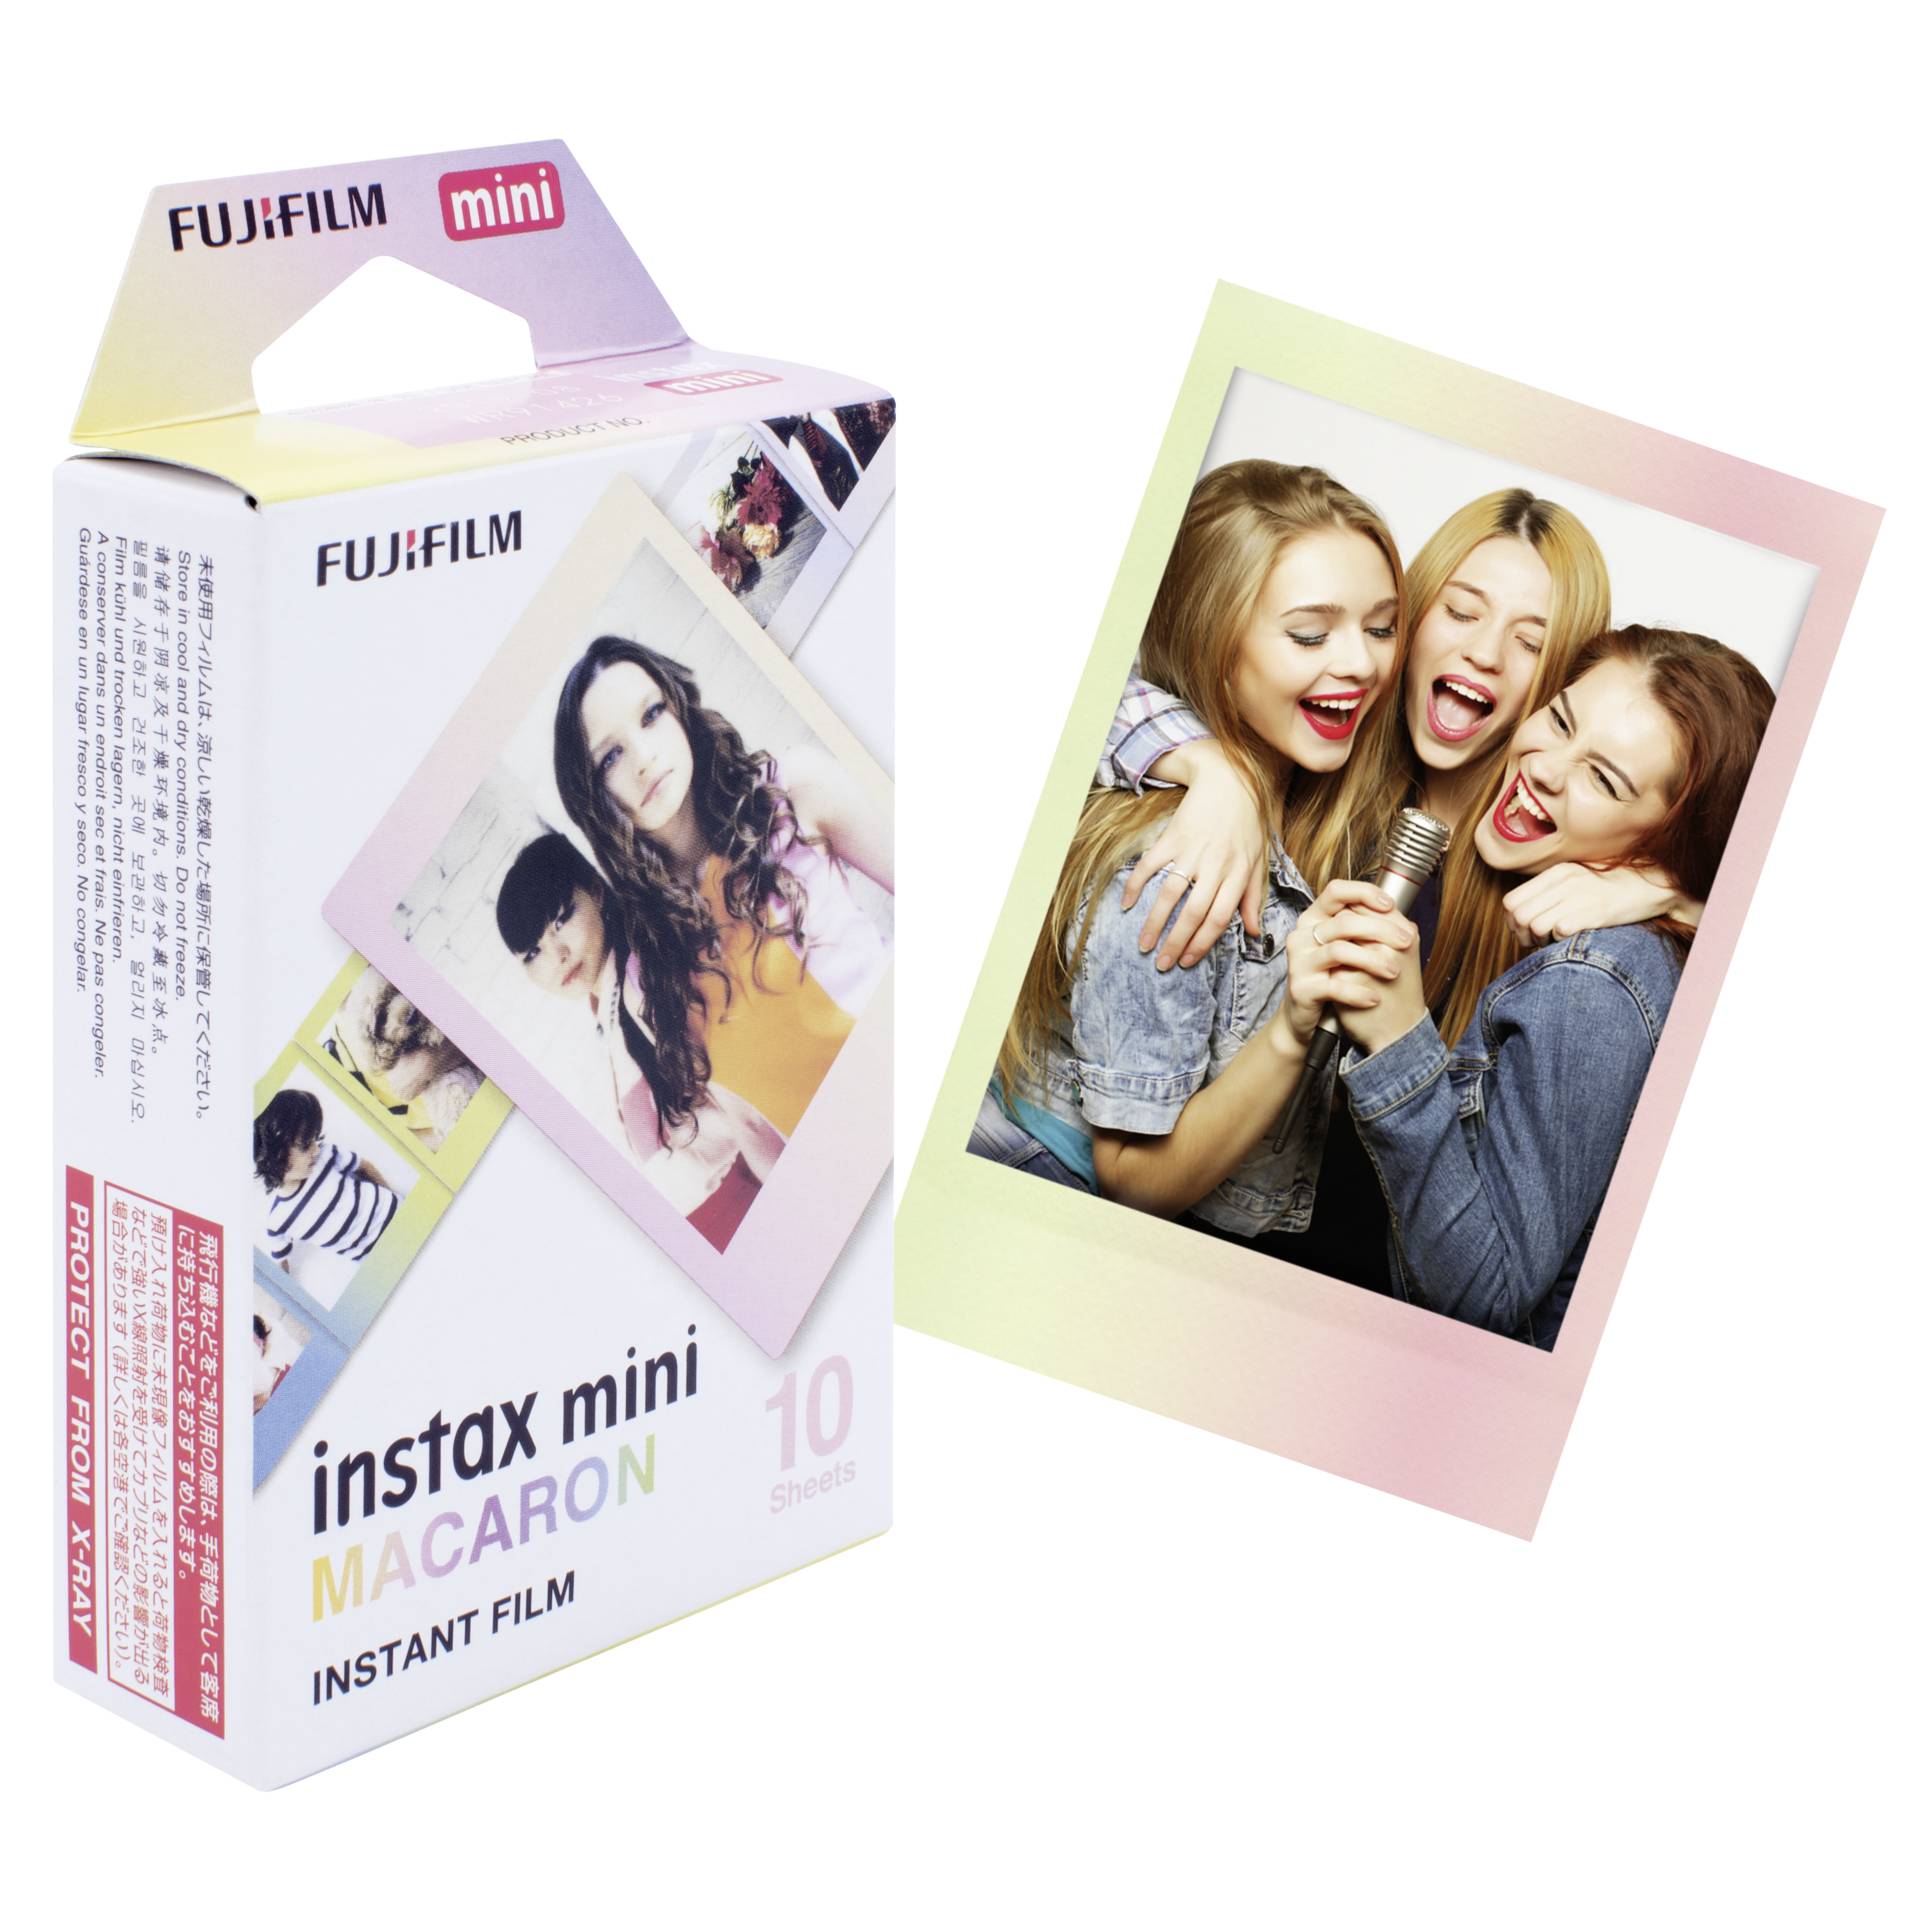 Fujifilm Instax Film Mini Macaron